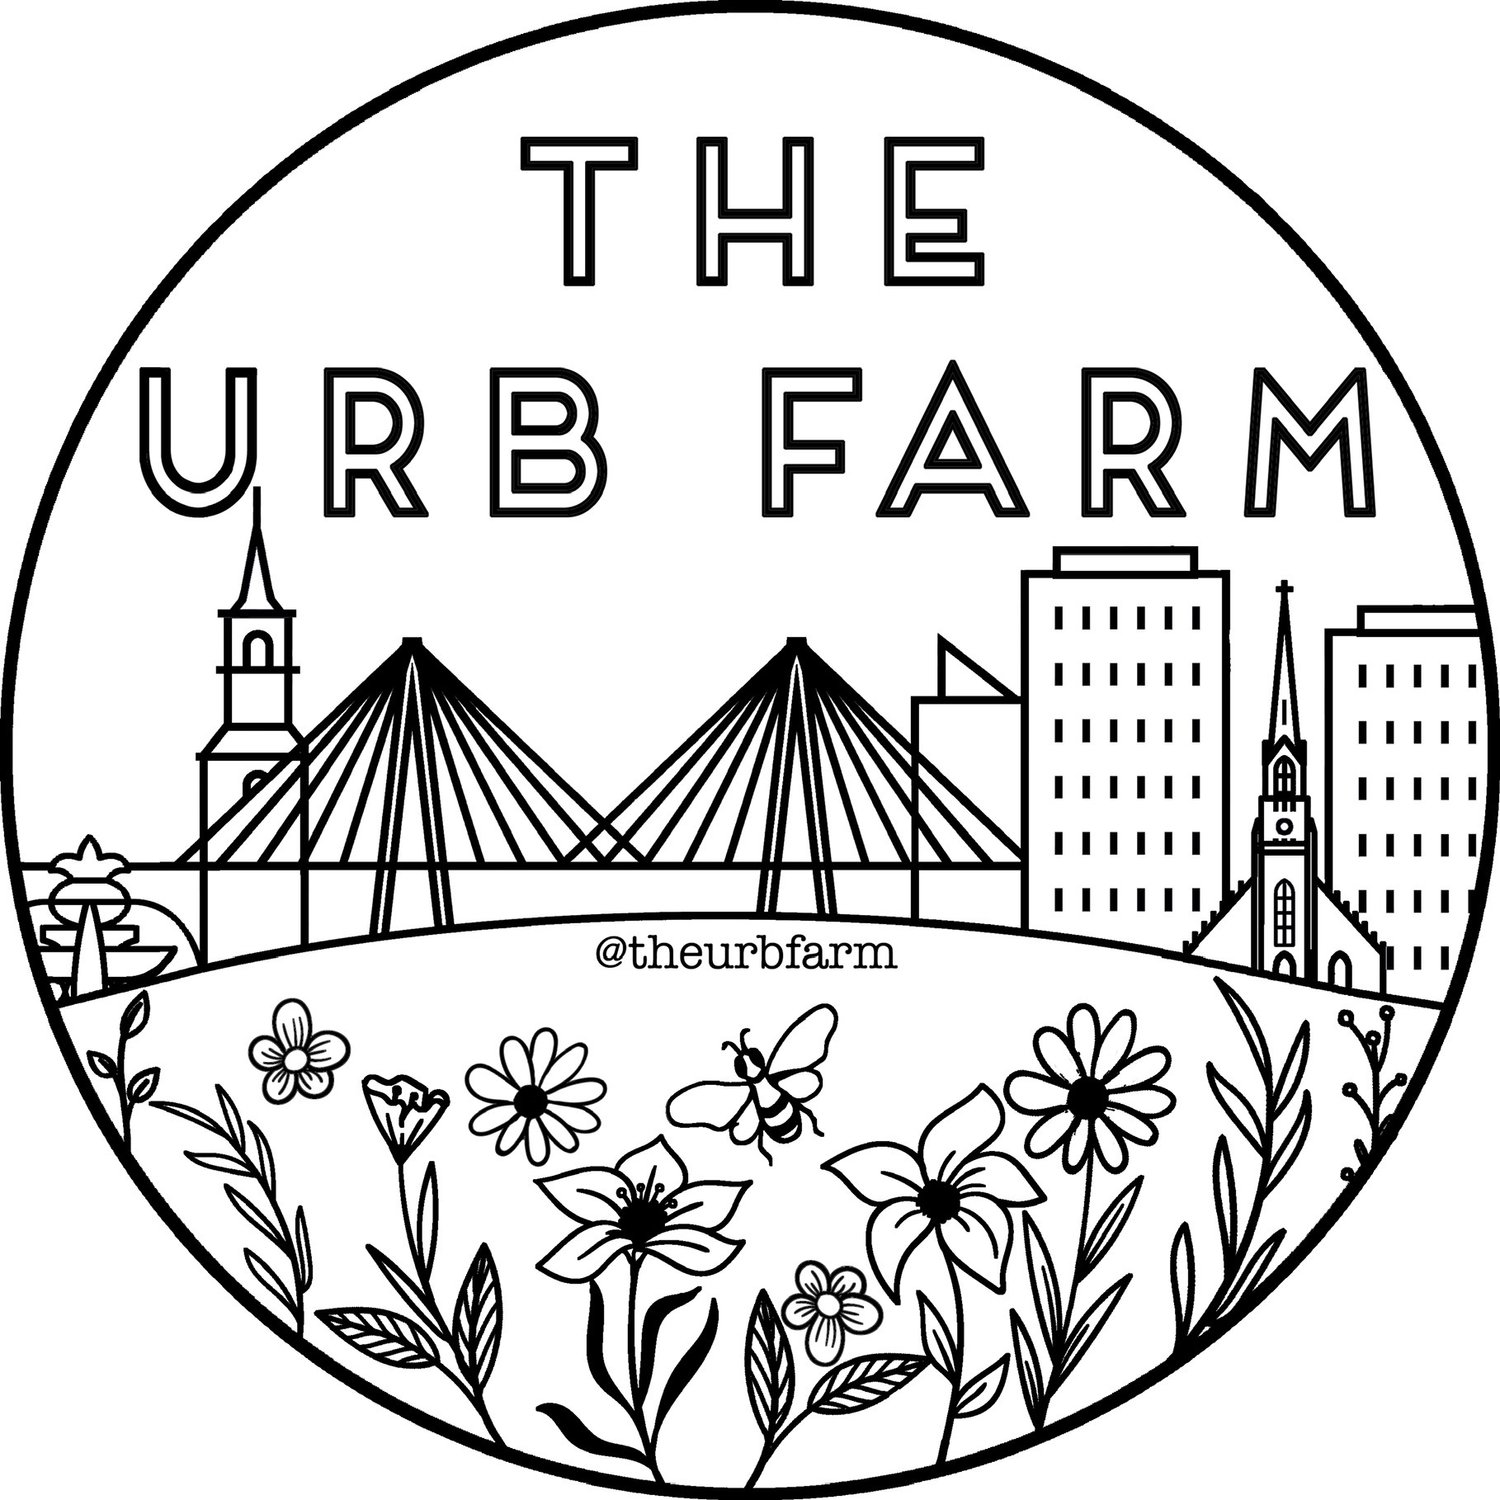 The Urb Farm